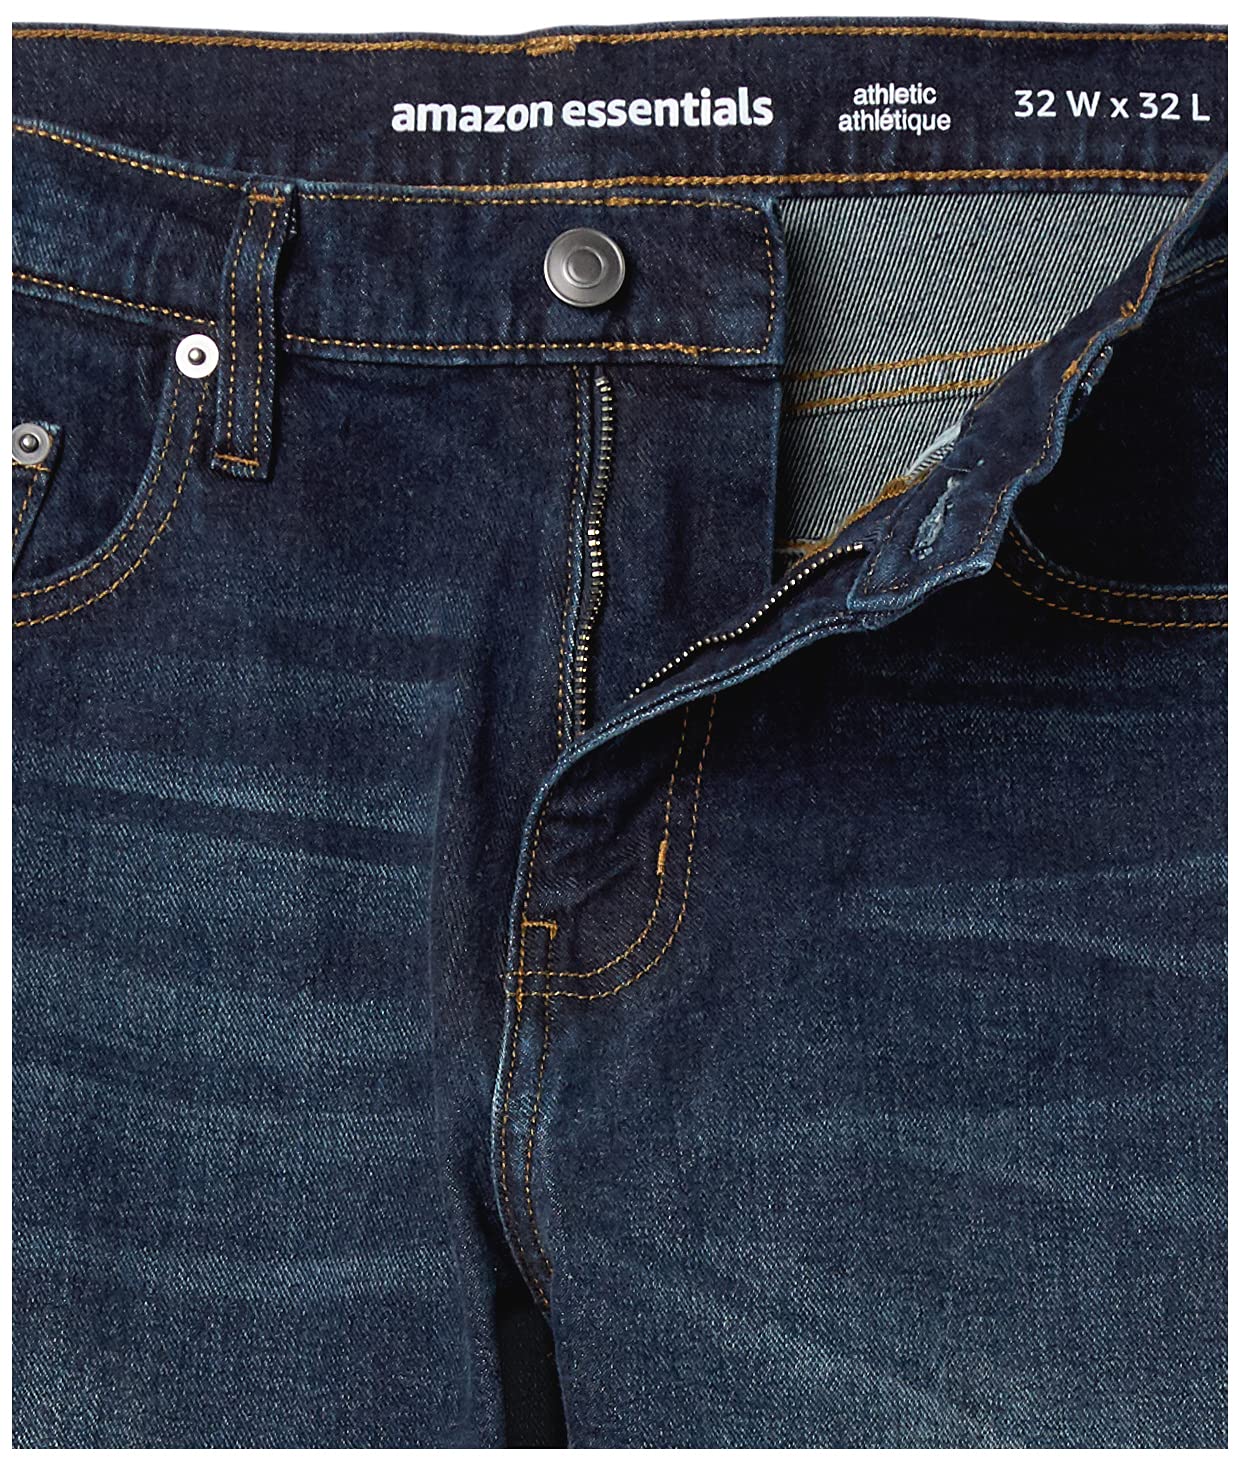 Amazon Essentials Men's Athletic-Fit Stretch Jean